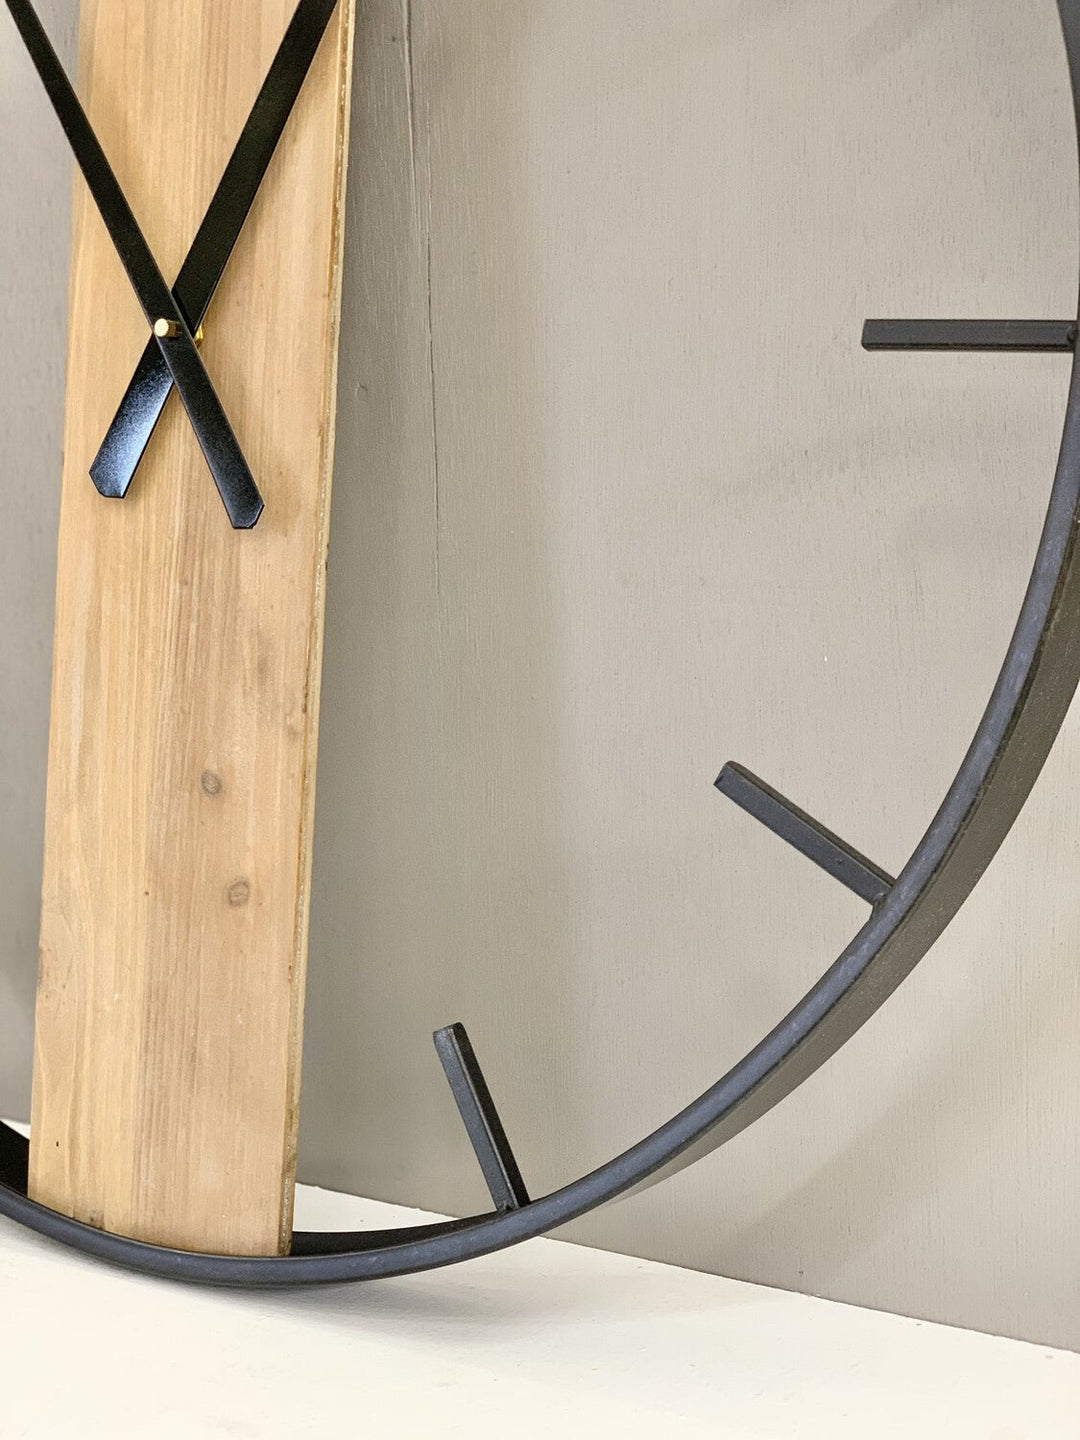 Industrial Metal and Wood Wall Clock